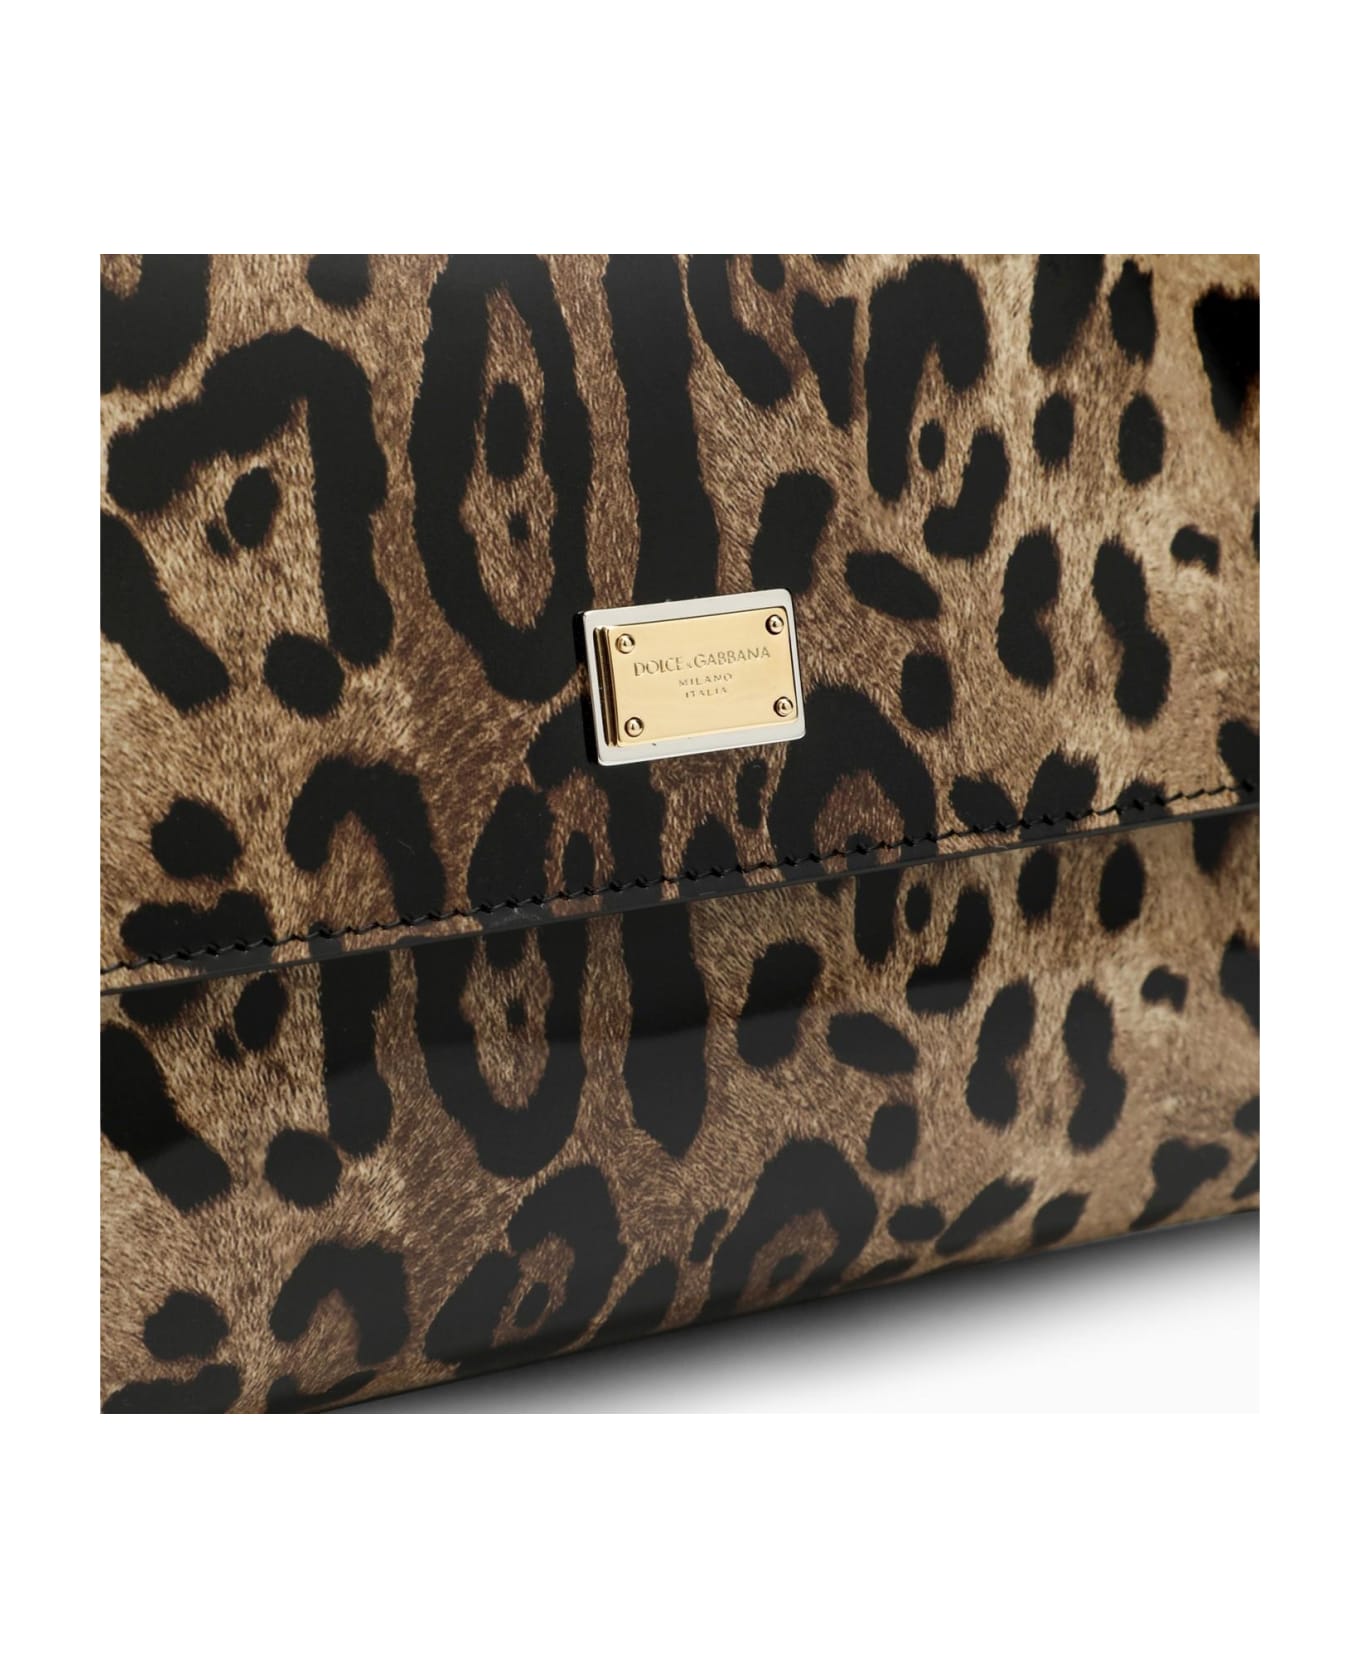 Dolce & Gabbana Medium Sicily Bag In Shiny Leopard-print Leather - M